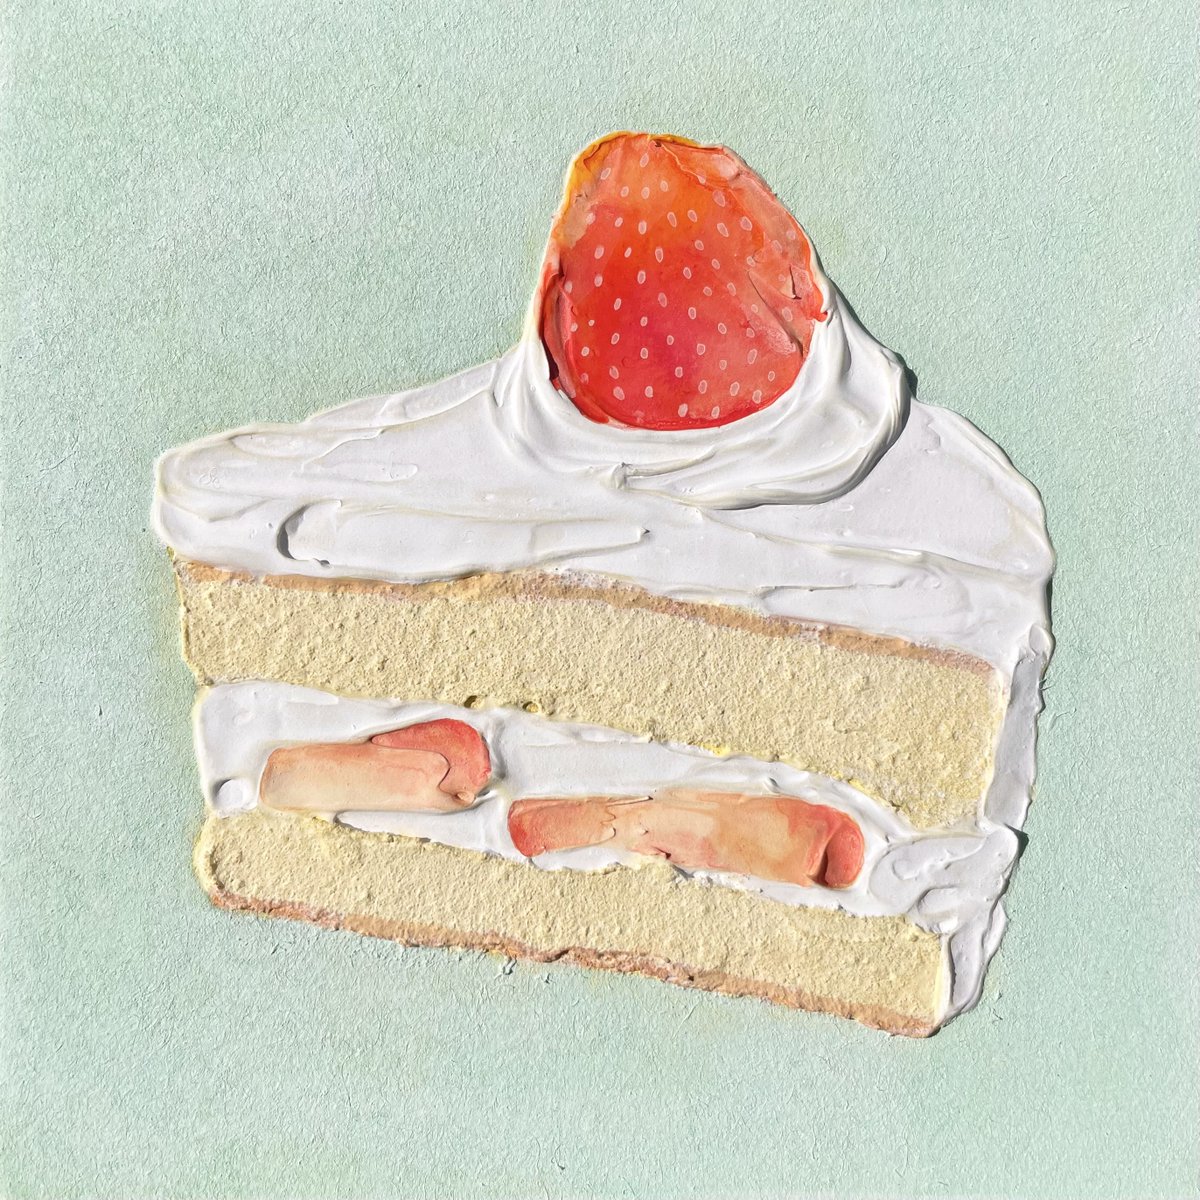 「I love shortcake!! :)」|𝓝𝓪𝓽𝓼𝓾𝓶𝓲🍓Natsumi Takahashiのイラスト